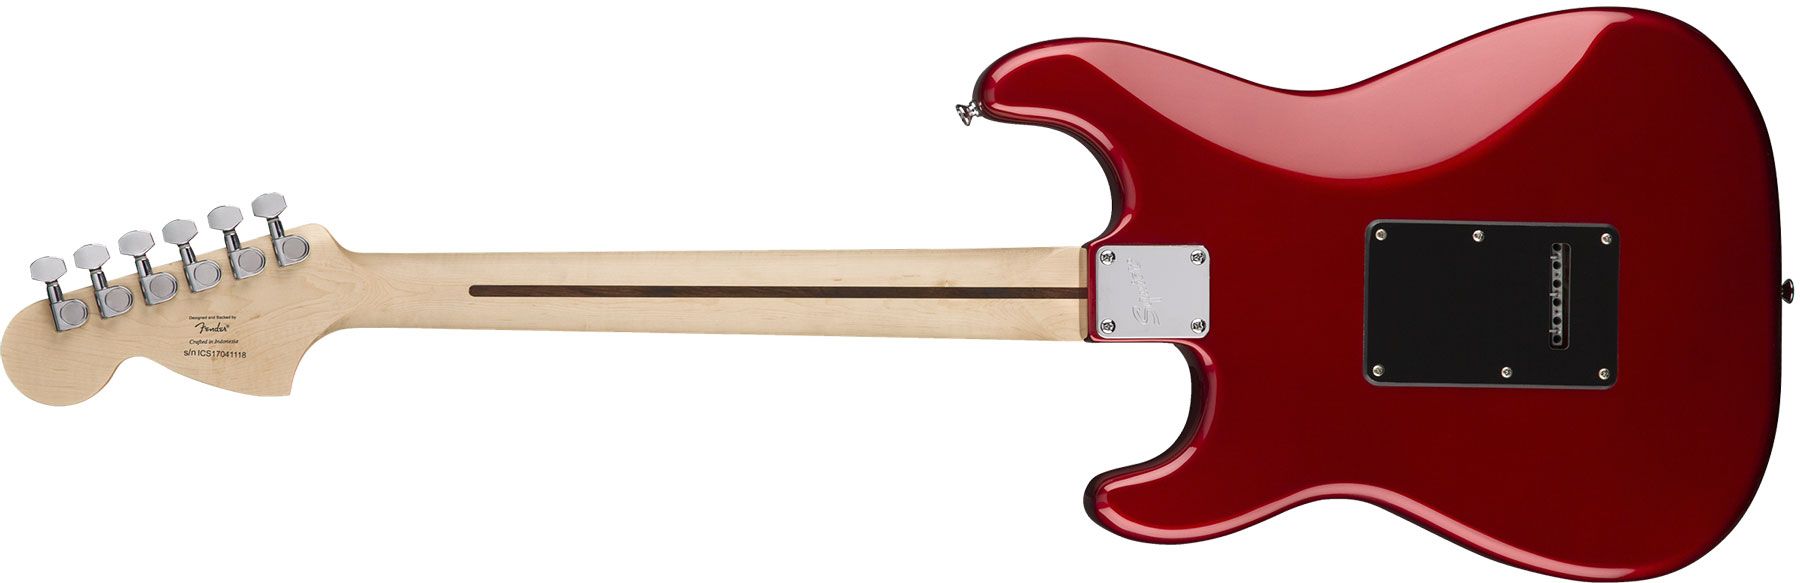 Squier Strat Affinity Hss Pack +fender Frontman 15g Trem Lau - Candy Apple Red - Pack Guitare Électrique - Variation 2